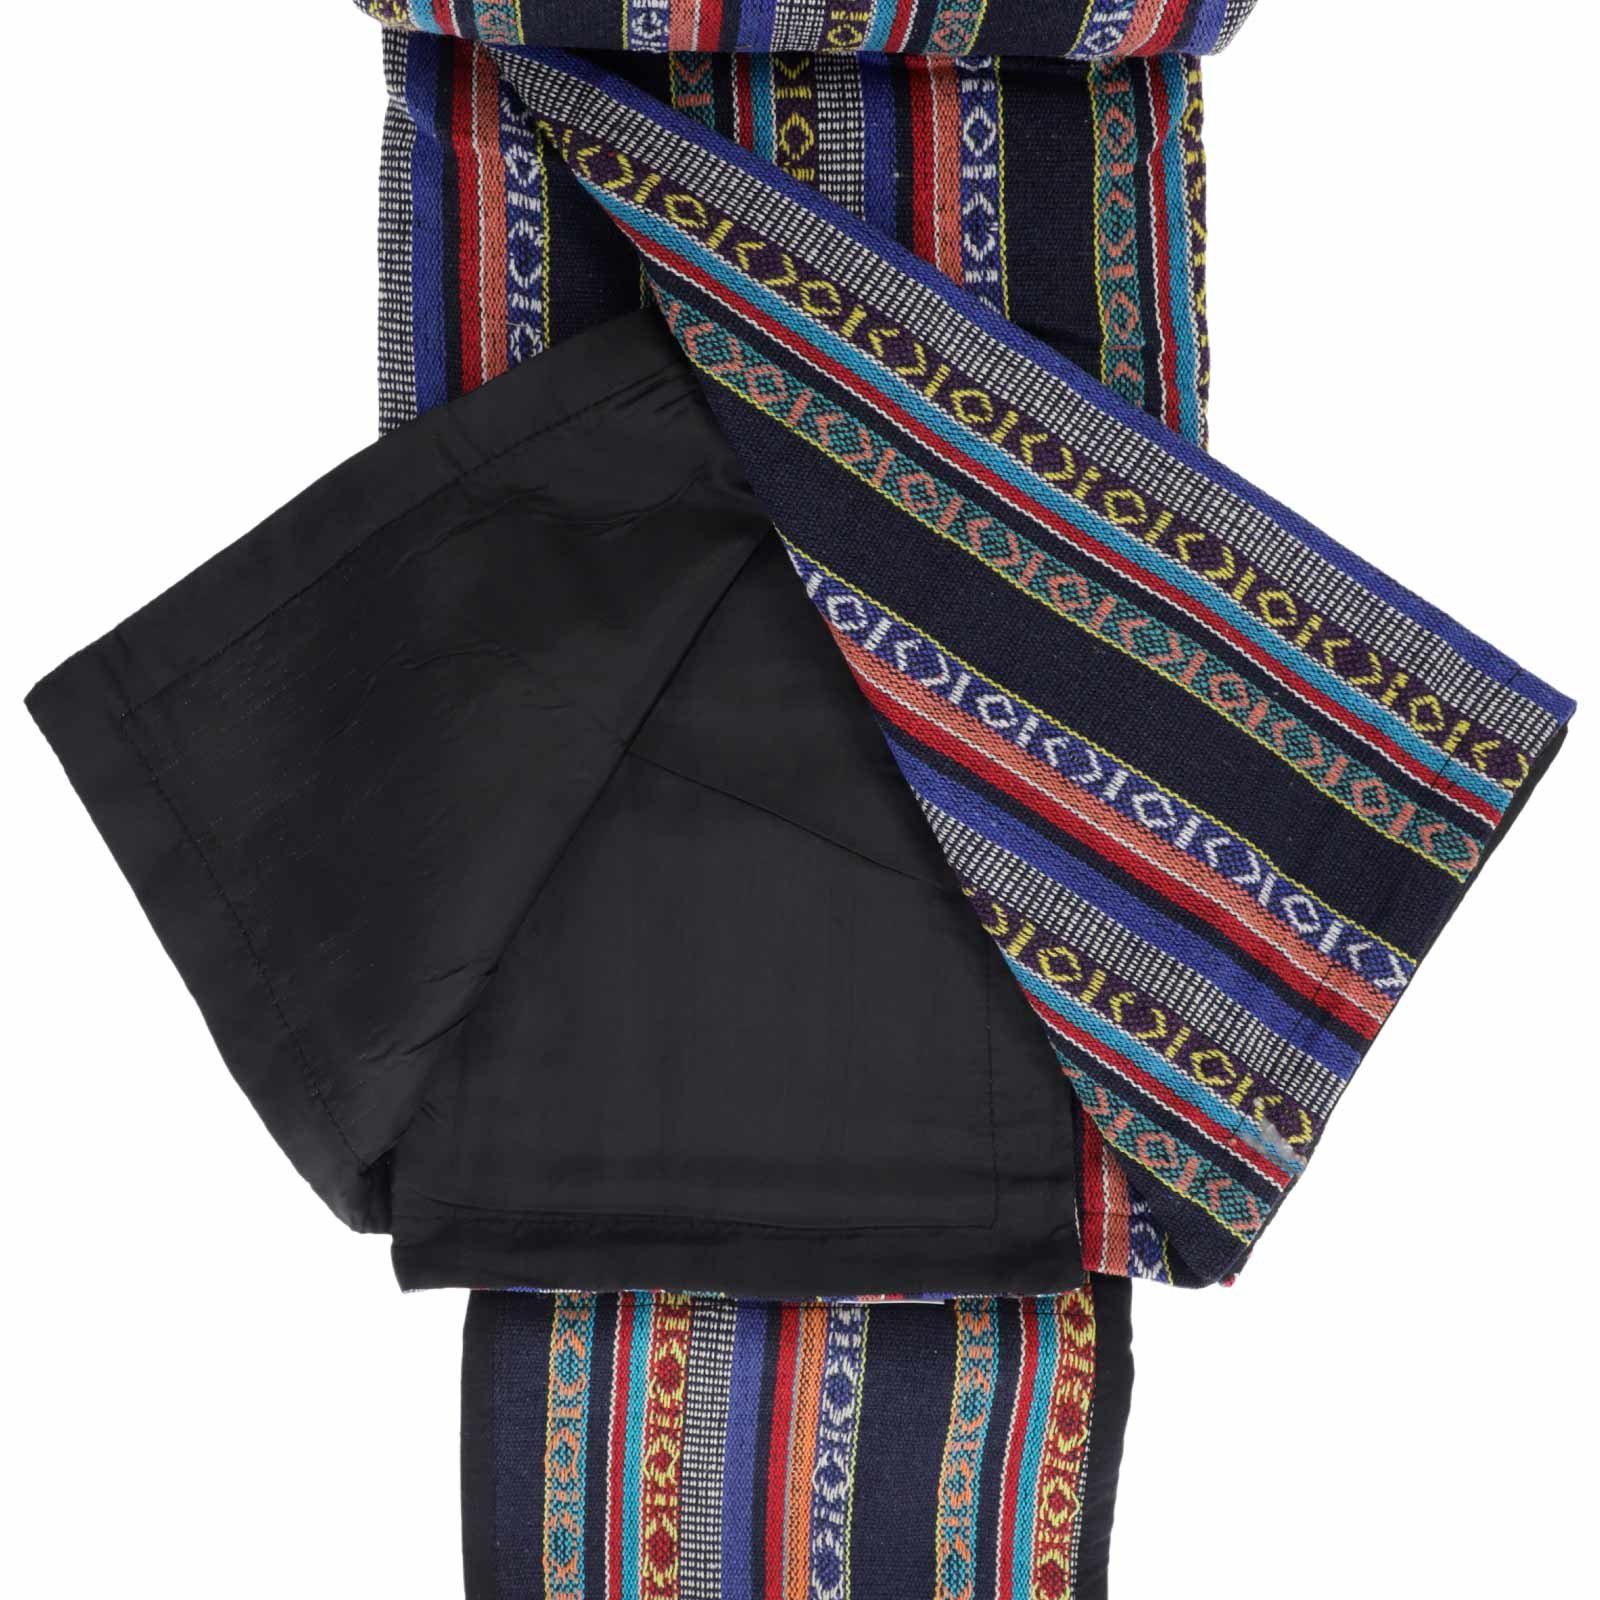 Mehrfarbig UND Picknickdecke+Azteken MAGIE KUNST Handgewebte Muster+Tragegriff, Picknickdecke Familien